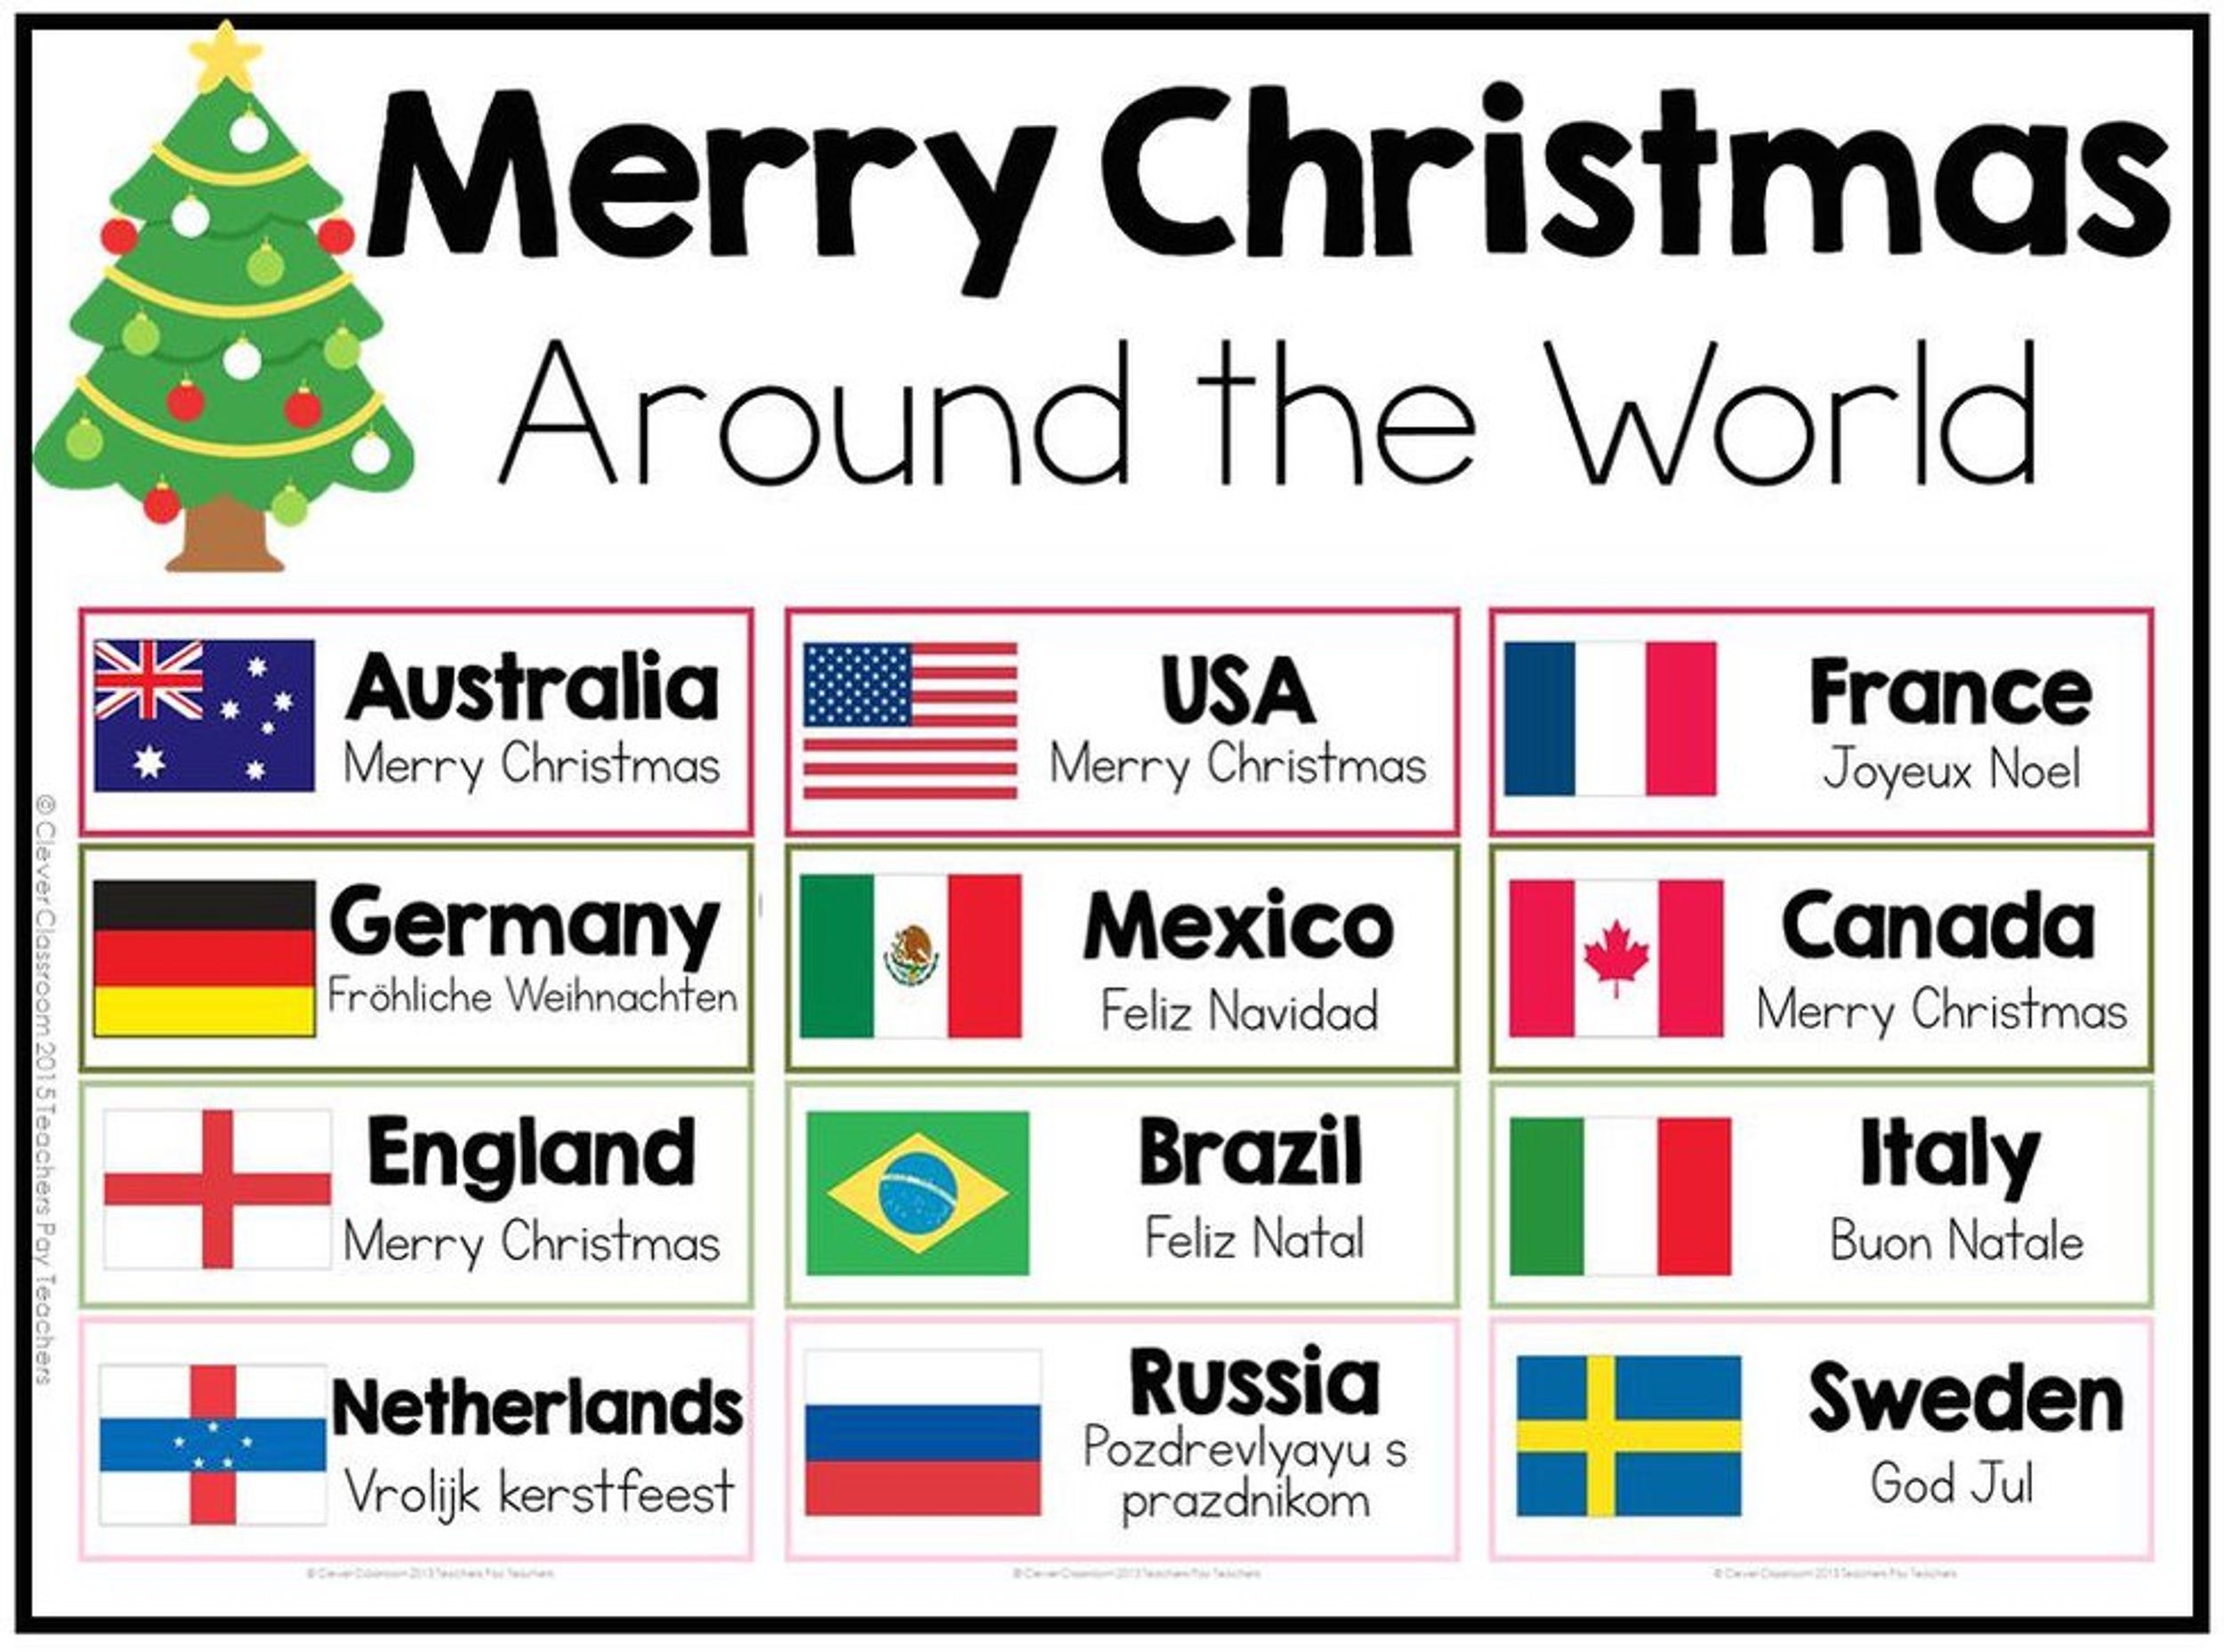 Christmas Traditions Around The World